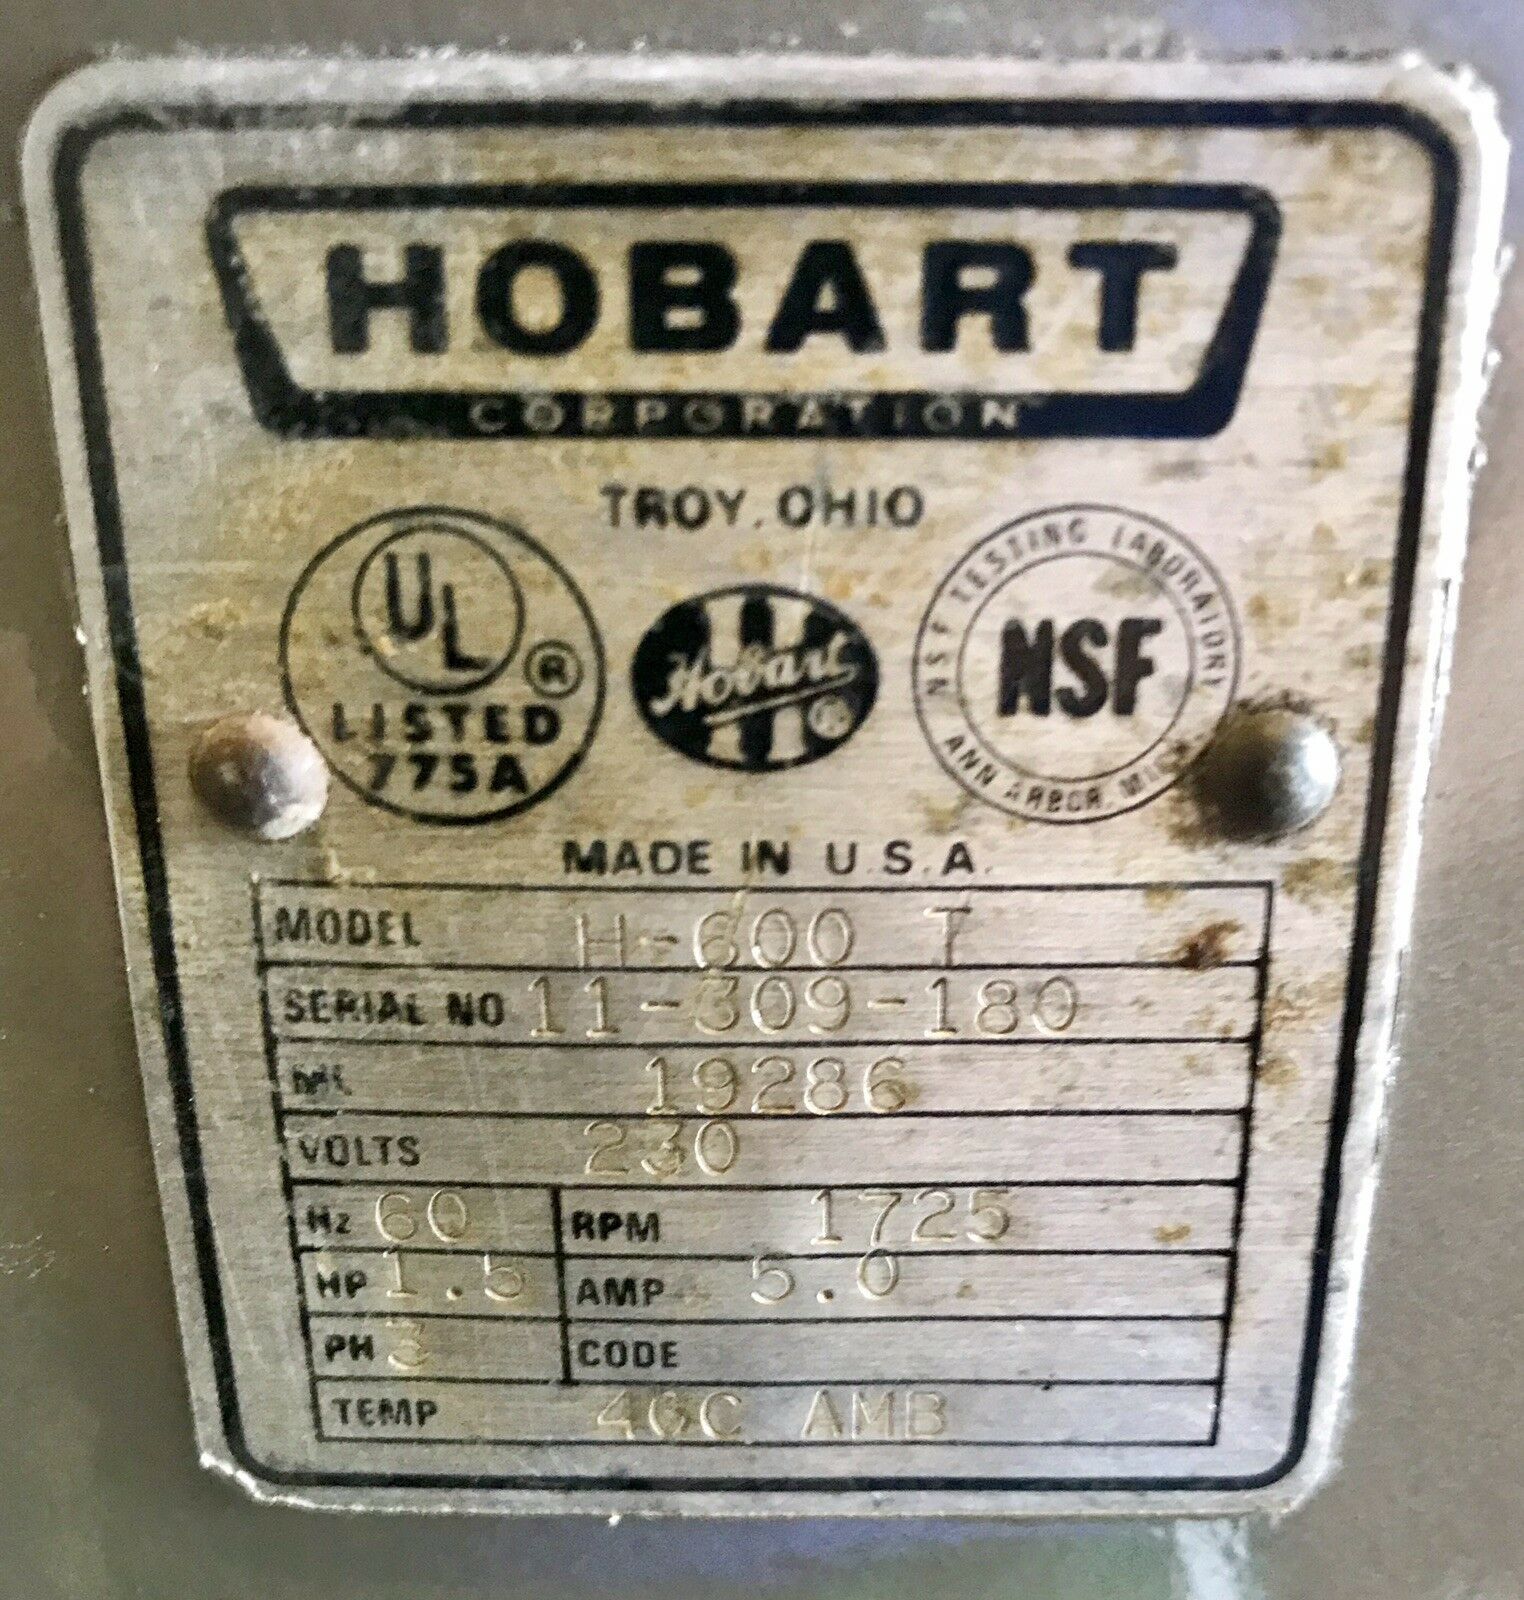 Hobart H600T Commercial 60 Quart Mixer 3 Phase 230V 60QT wow!